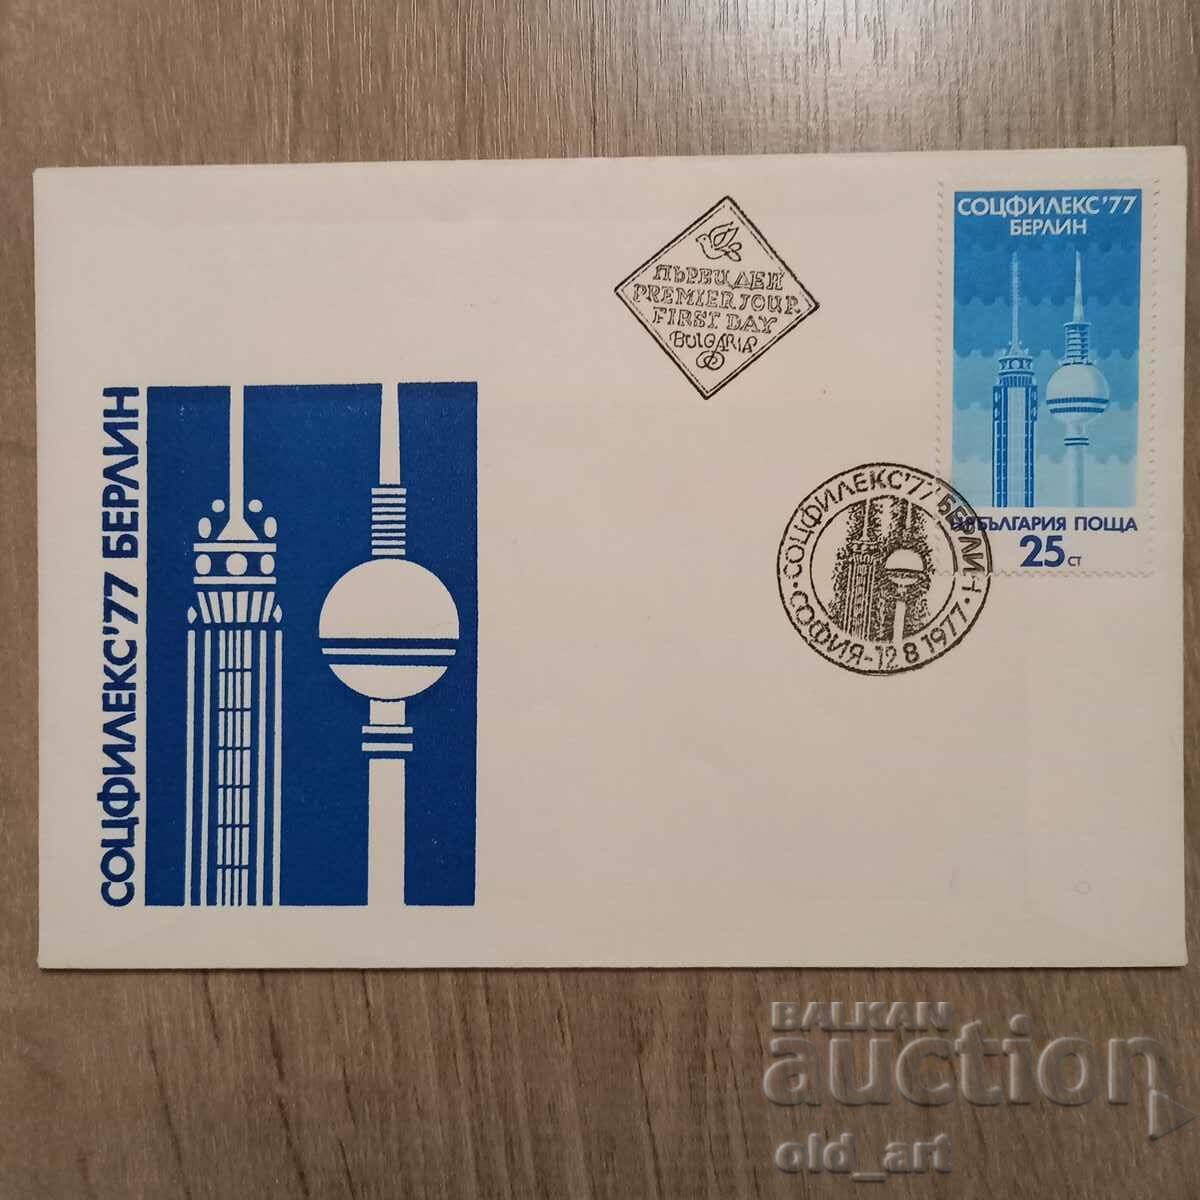 Plic poștal - Socialflex 77 Berlin